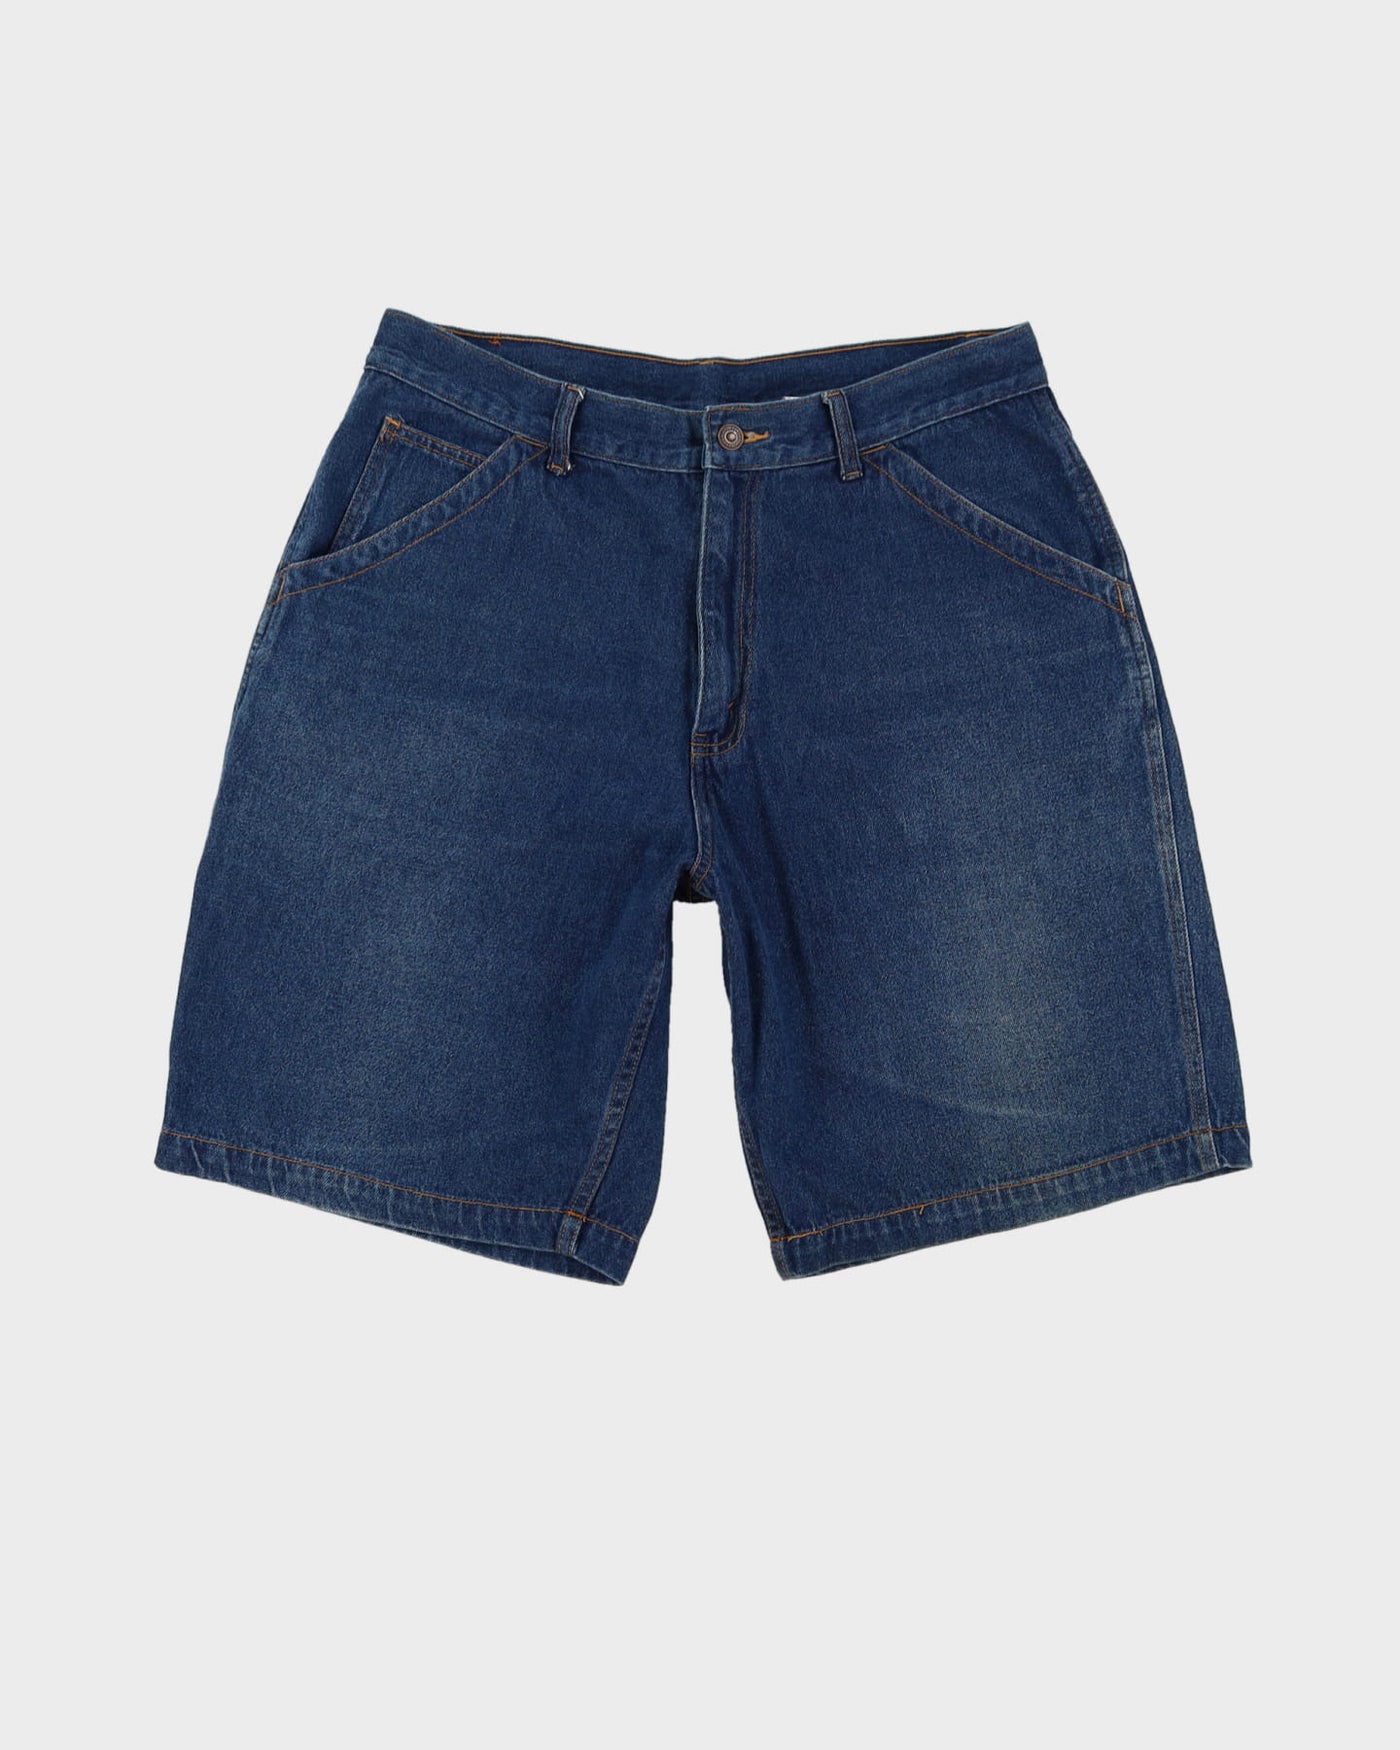 Levi's Blue Denim Shorts - W36